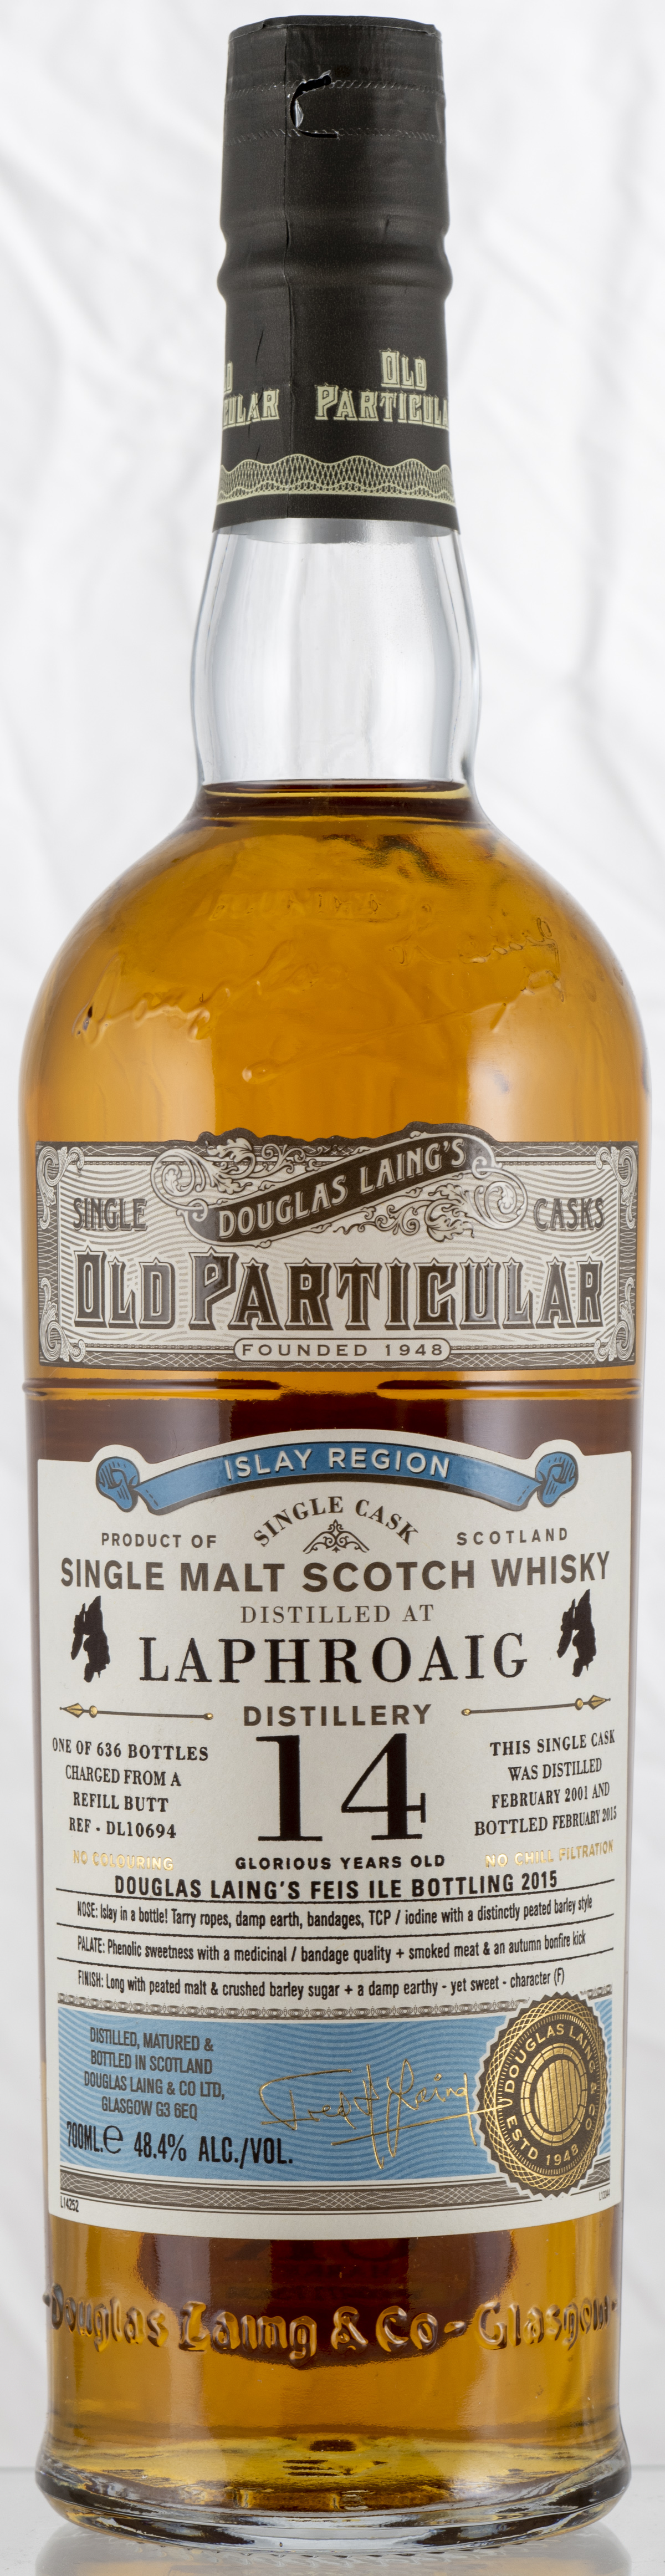 Billede: PHC_3999 - Douglas Laing Old Particular Laphroiag 14 (Feis Isle 2015) - bottle front.jpg